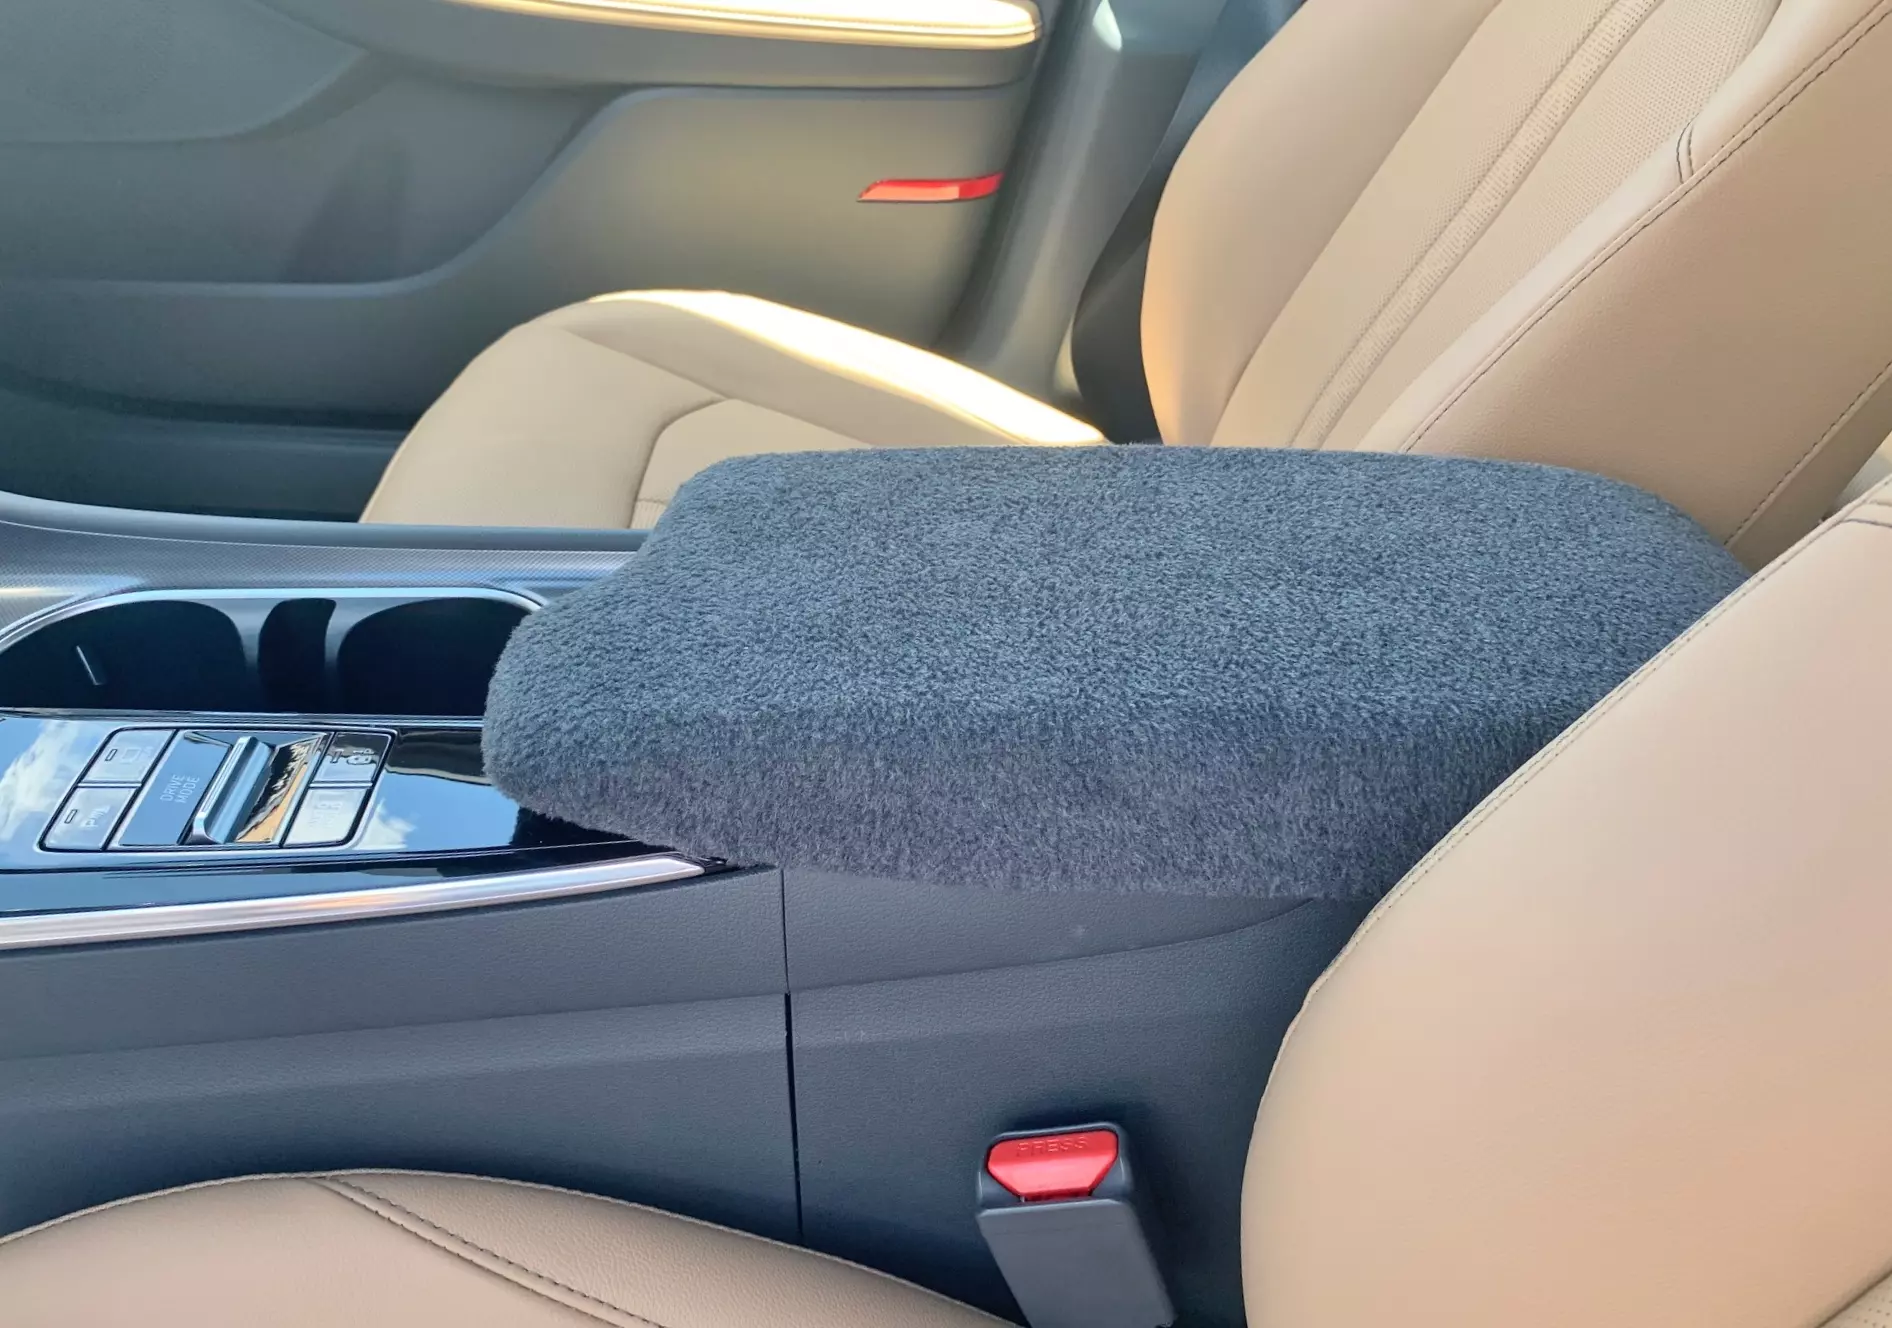 Buy Fleece Center Console Armrest Cover fits the Hyundai Sonata 2020-2022